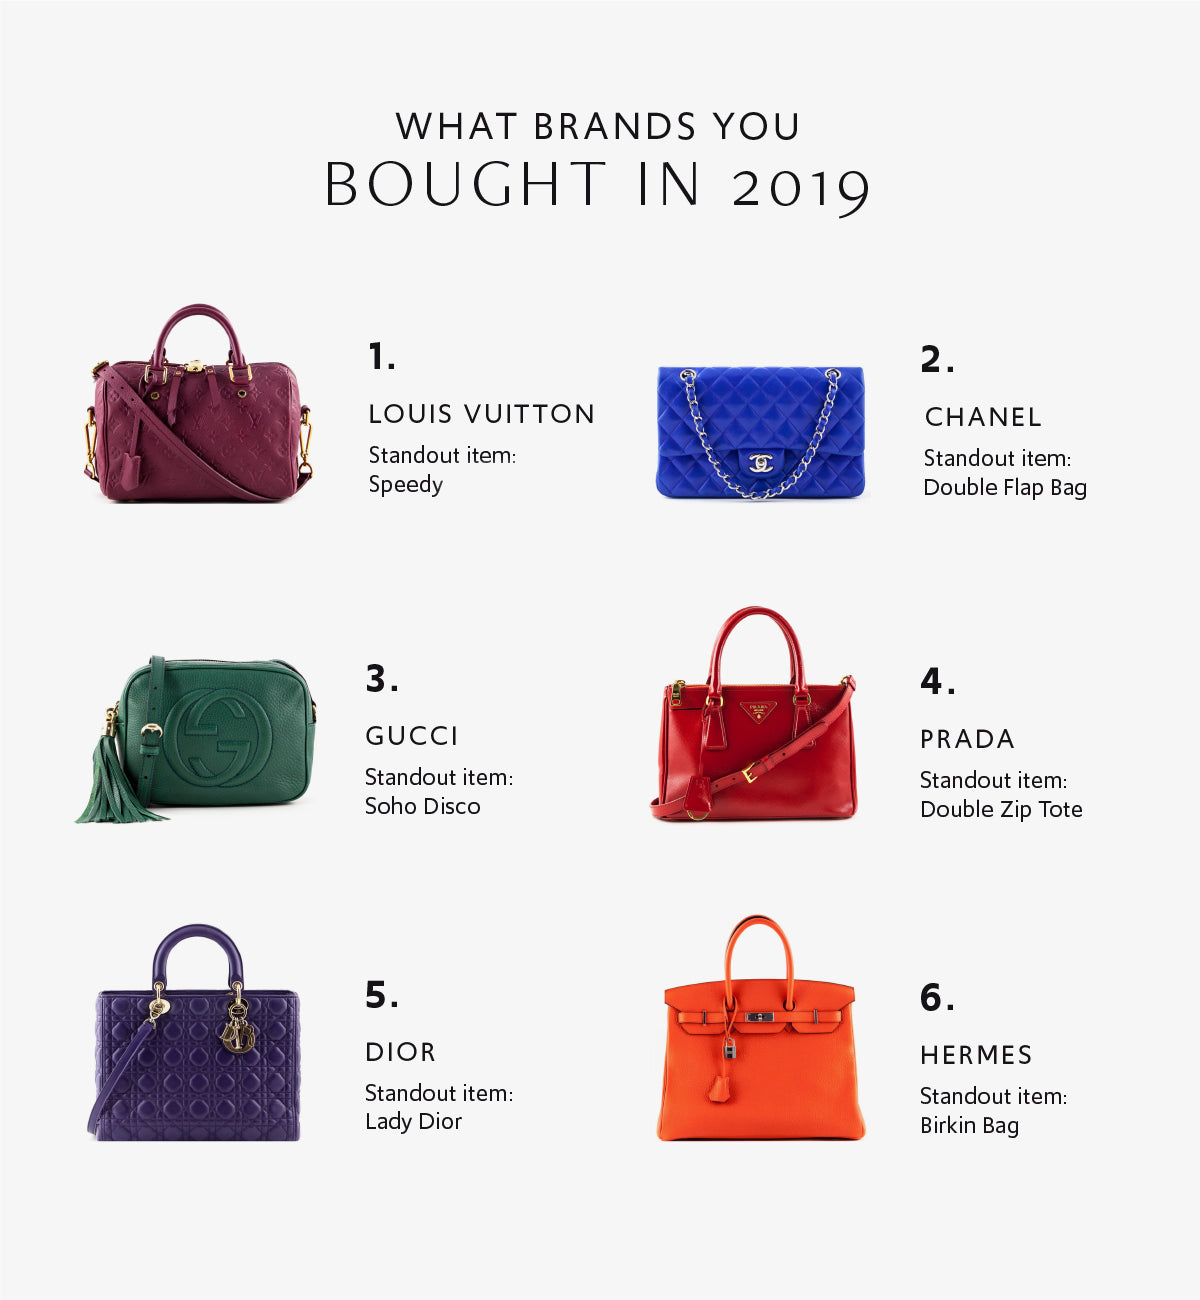 Top designer handbags you purchased in 2019